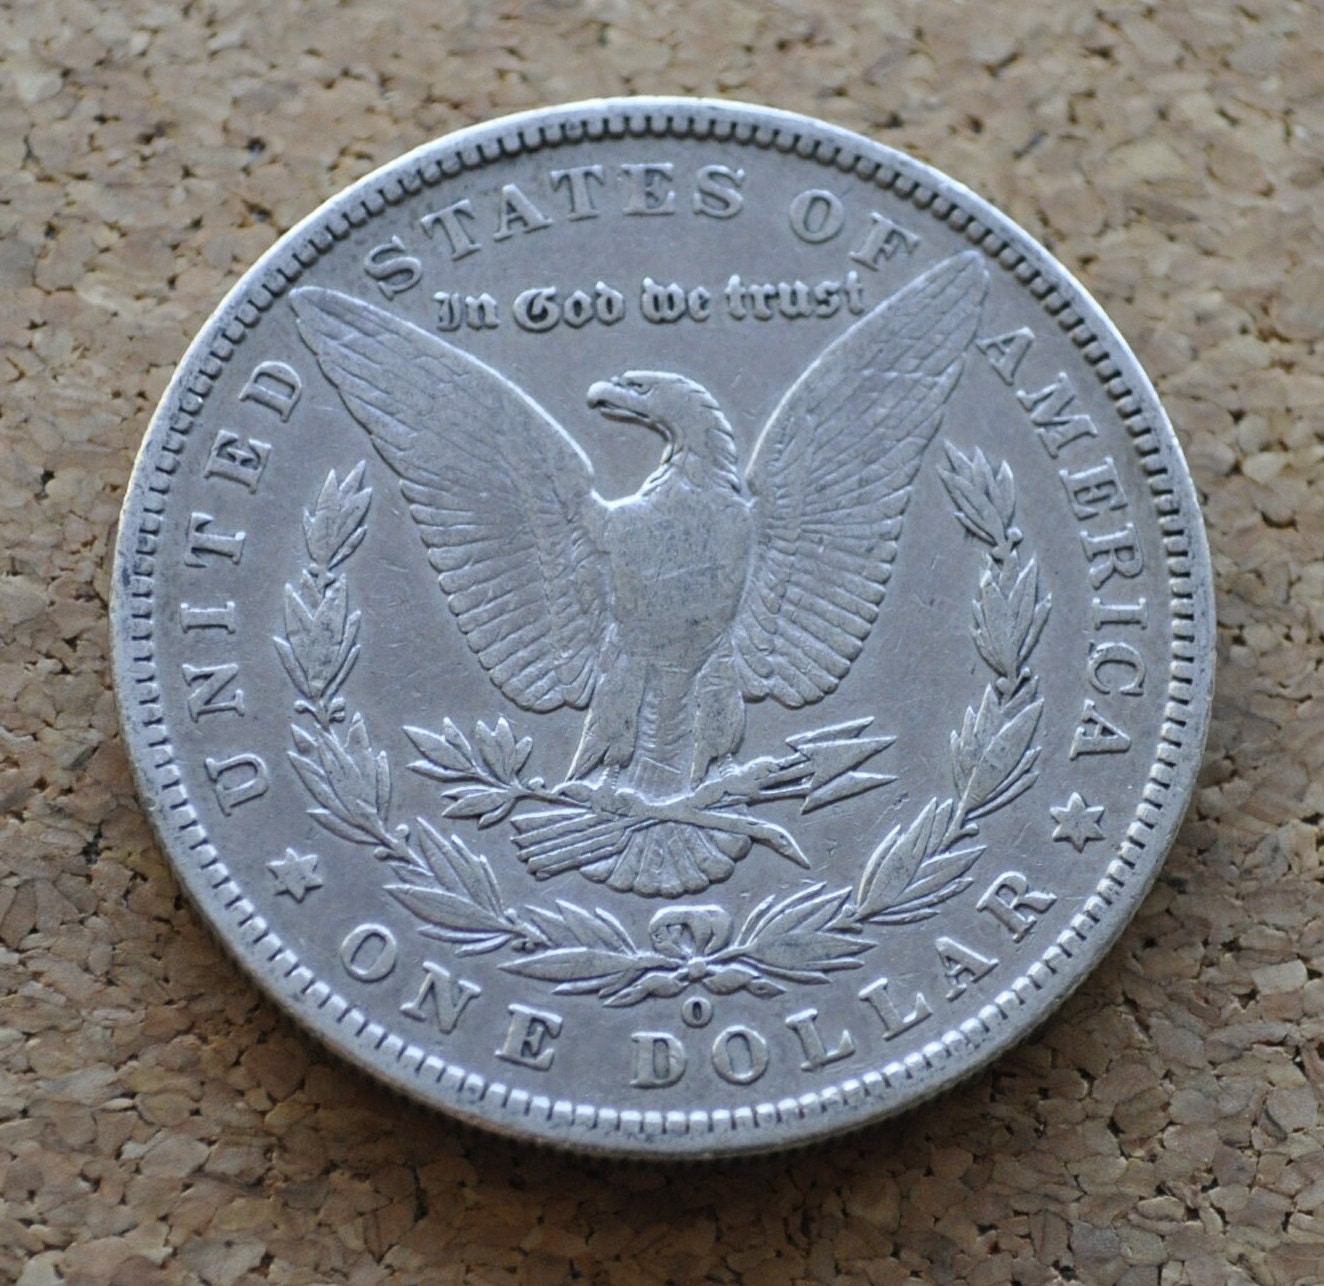 1887-O Morgan Silver Dollar - Great Condition / Detail - 1887-O Morgan Dollar - 1887 Silver Dollar - O Mint Mark - Good Date